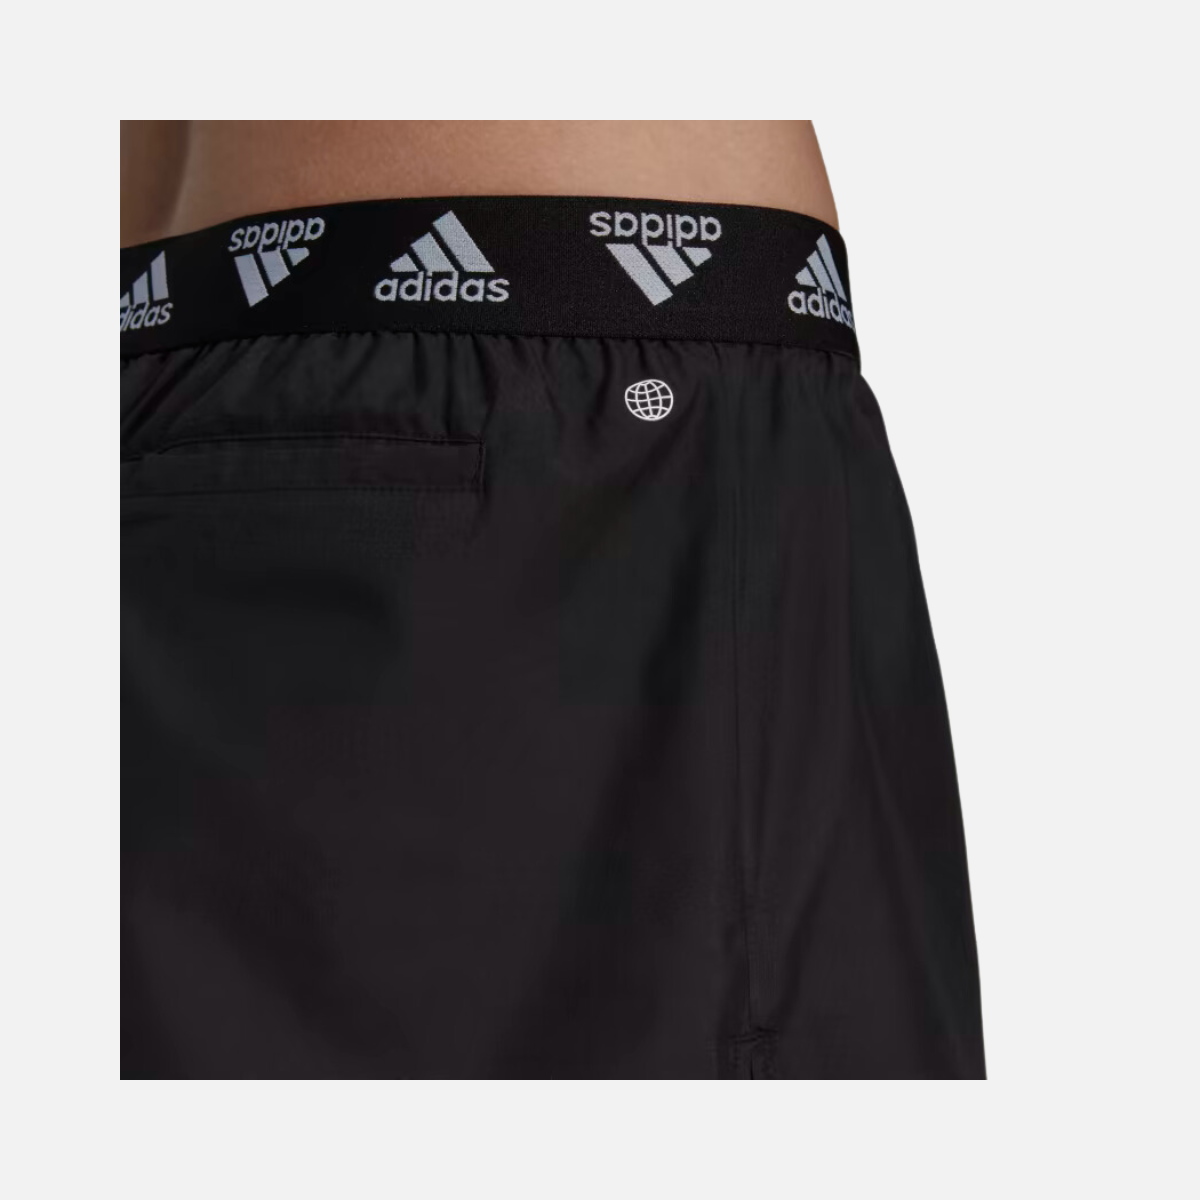 Adidas Branded Beach Women's Swim Shorts -Black/White